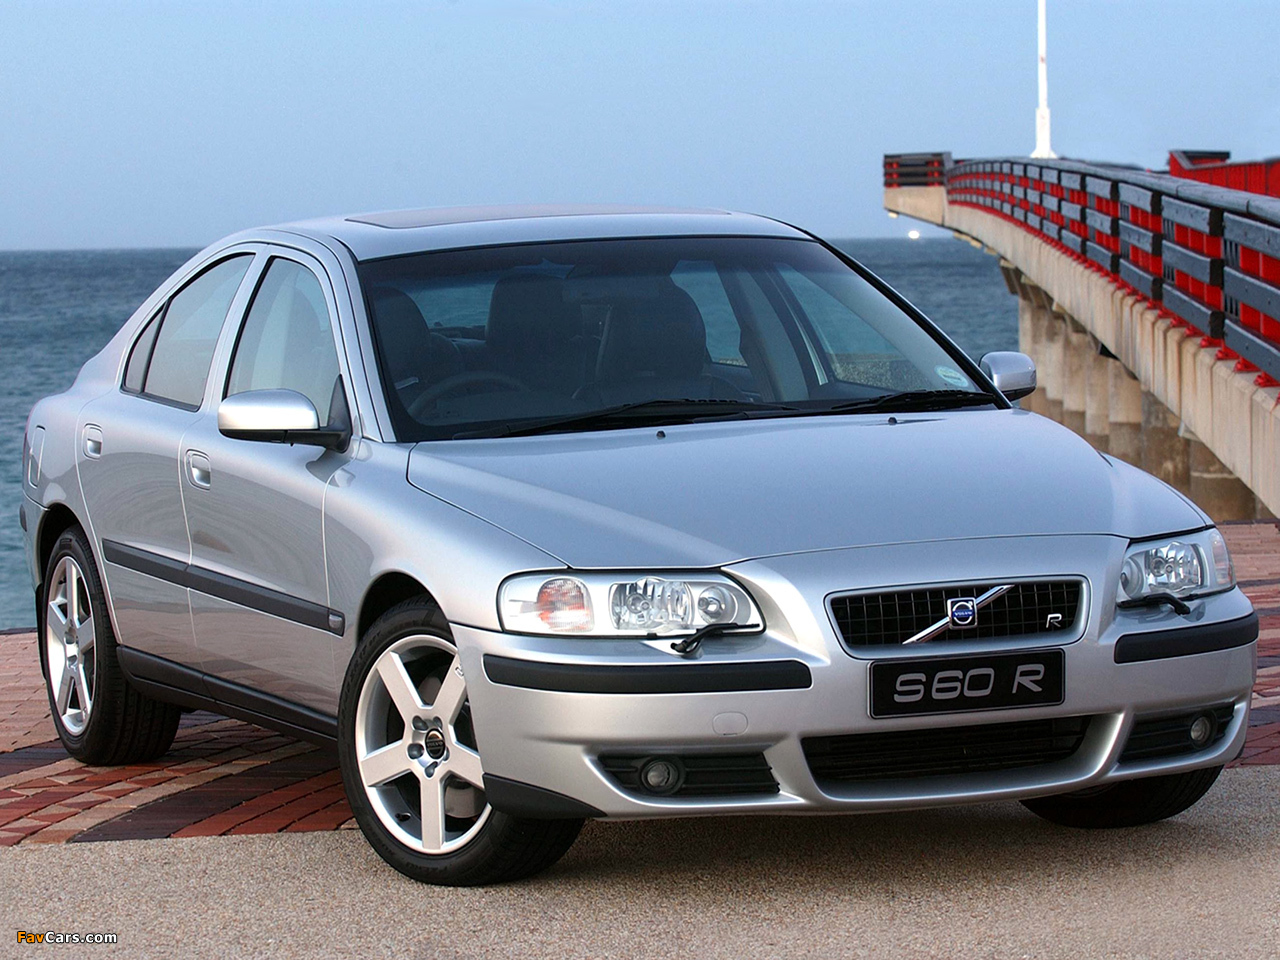 Volvo s60 2004. Volvo s60r. Volvo s60 r 2004. Вольво s60 2004 года. Volvo r60.